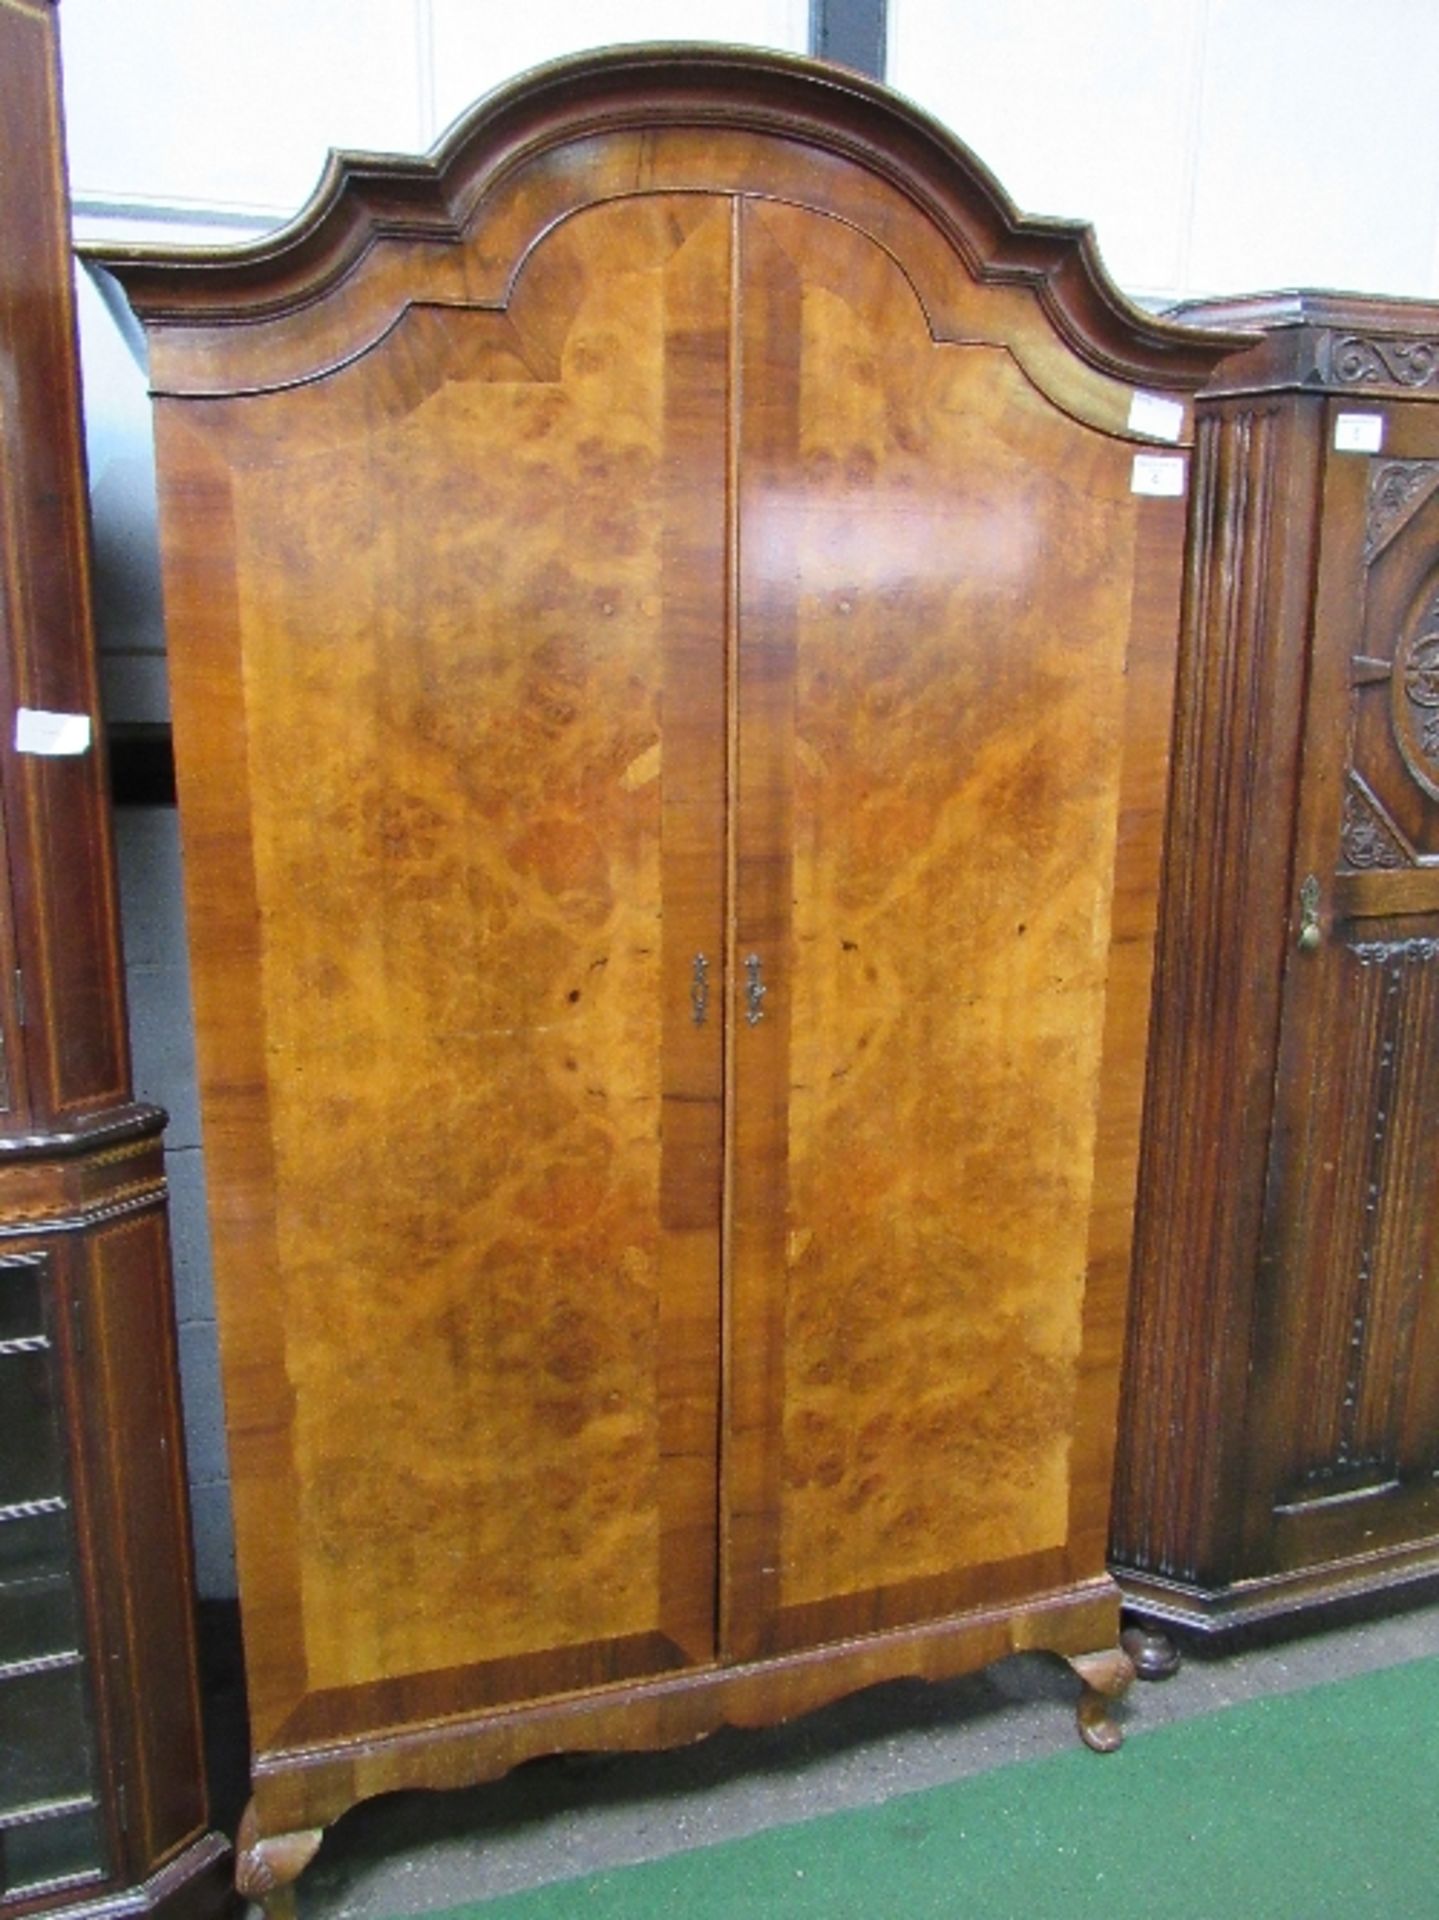 Burr walnut double door wardrobe with a break-arch top, 116cms x 48cms x 200cms. Estimate £30-40. - Image 2 of 2